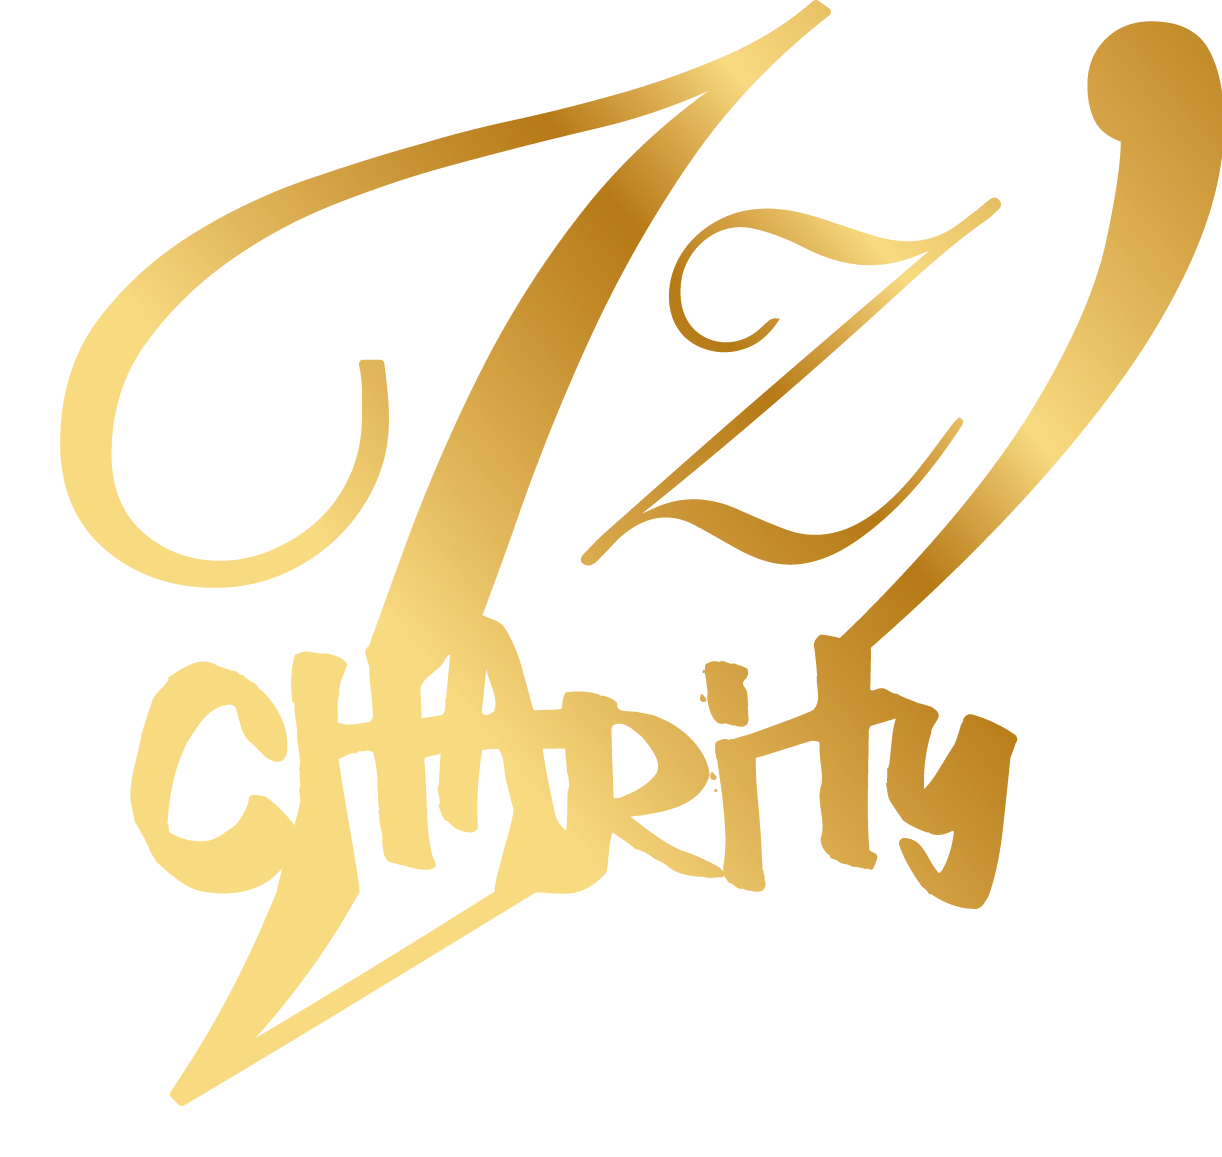 Vesey Charity logo